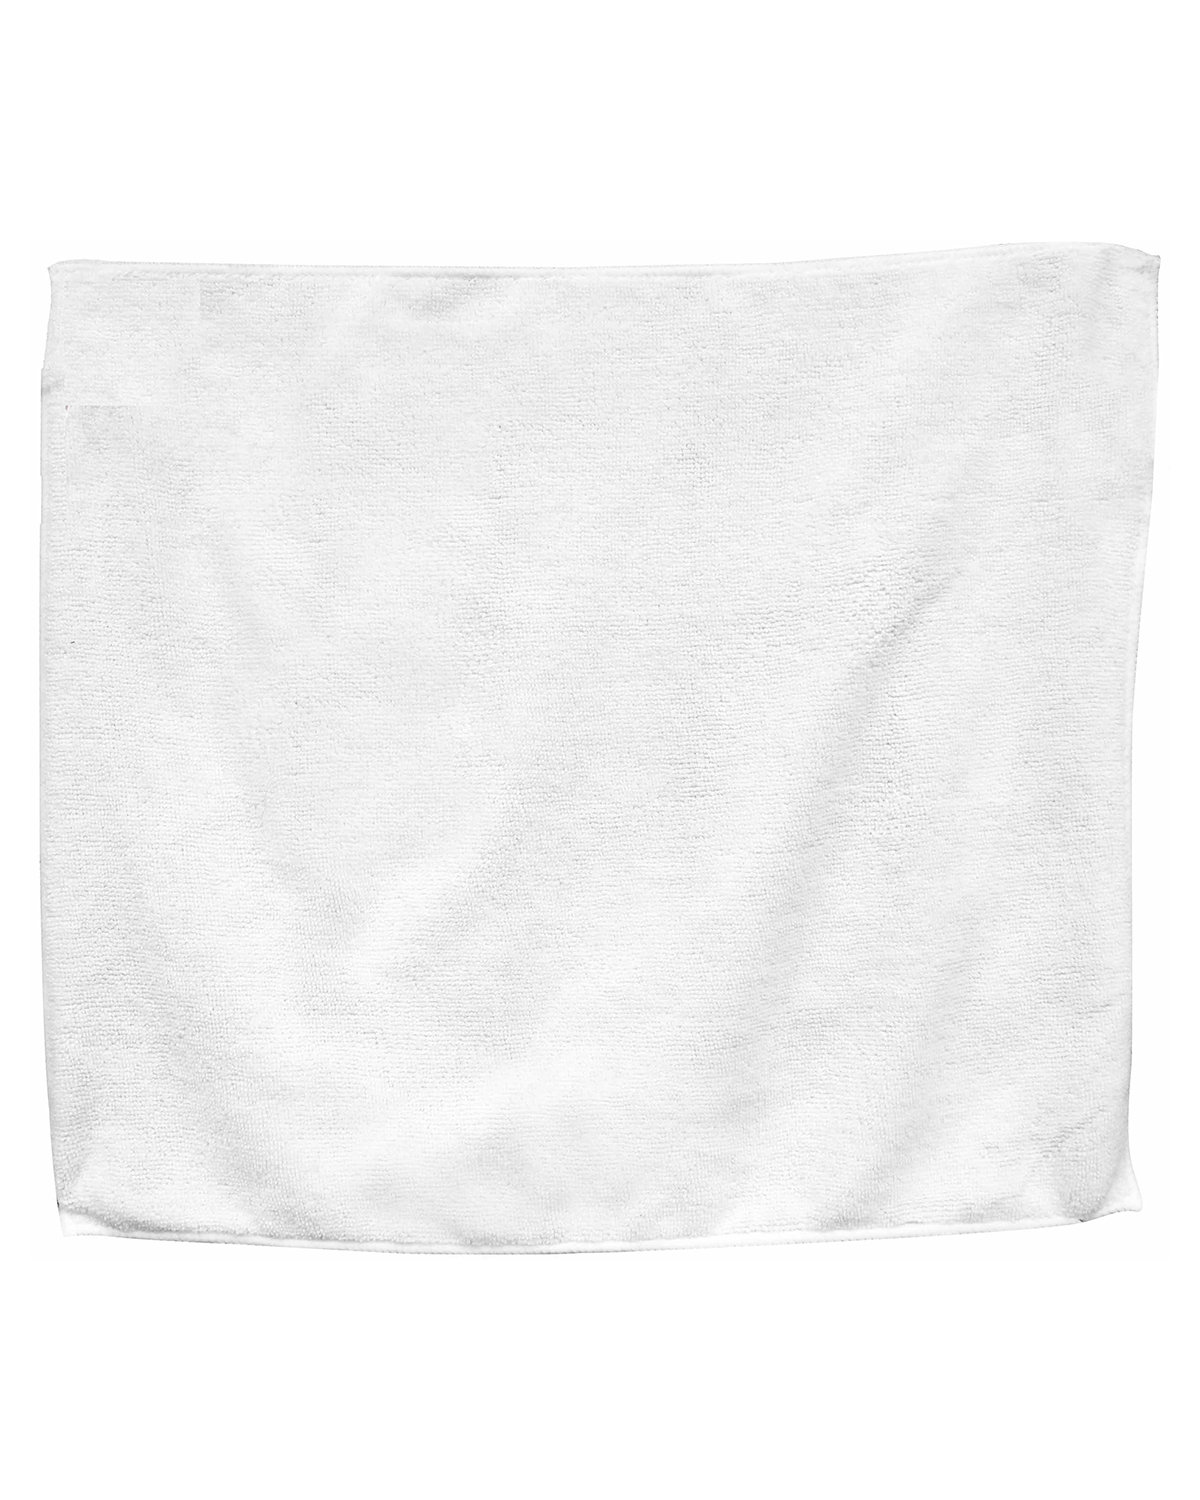 Micro Fiber Golf Towel-Carmel Towel Company